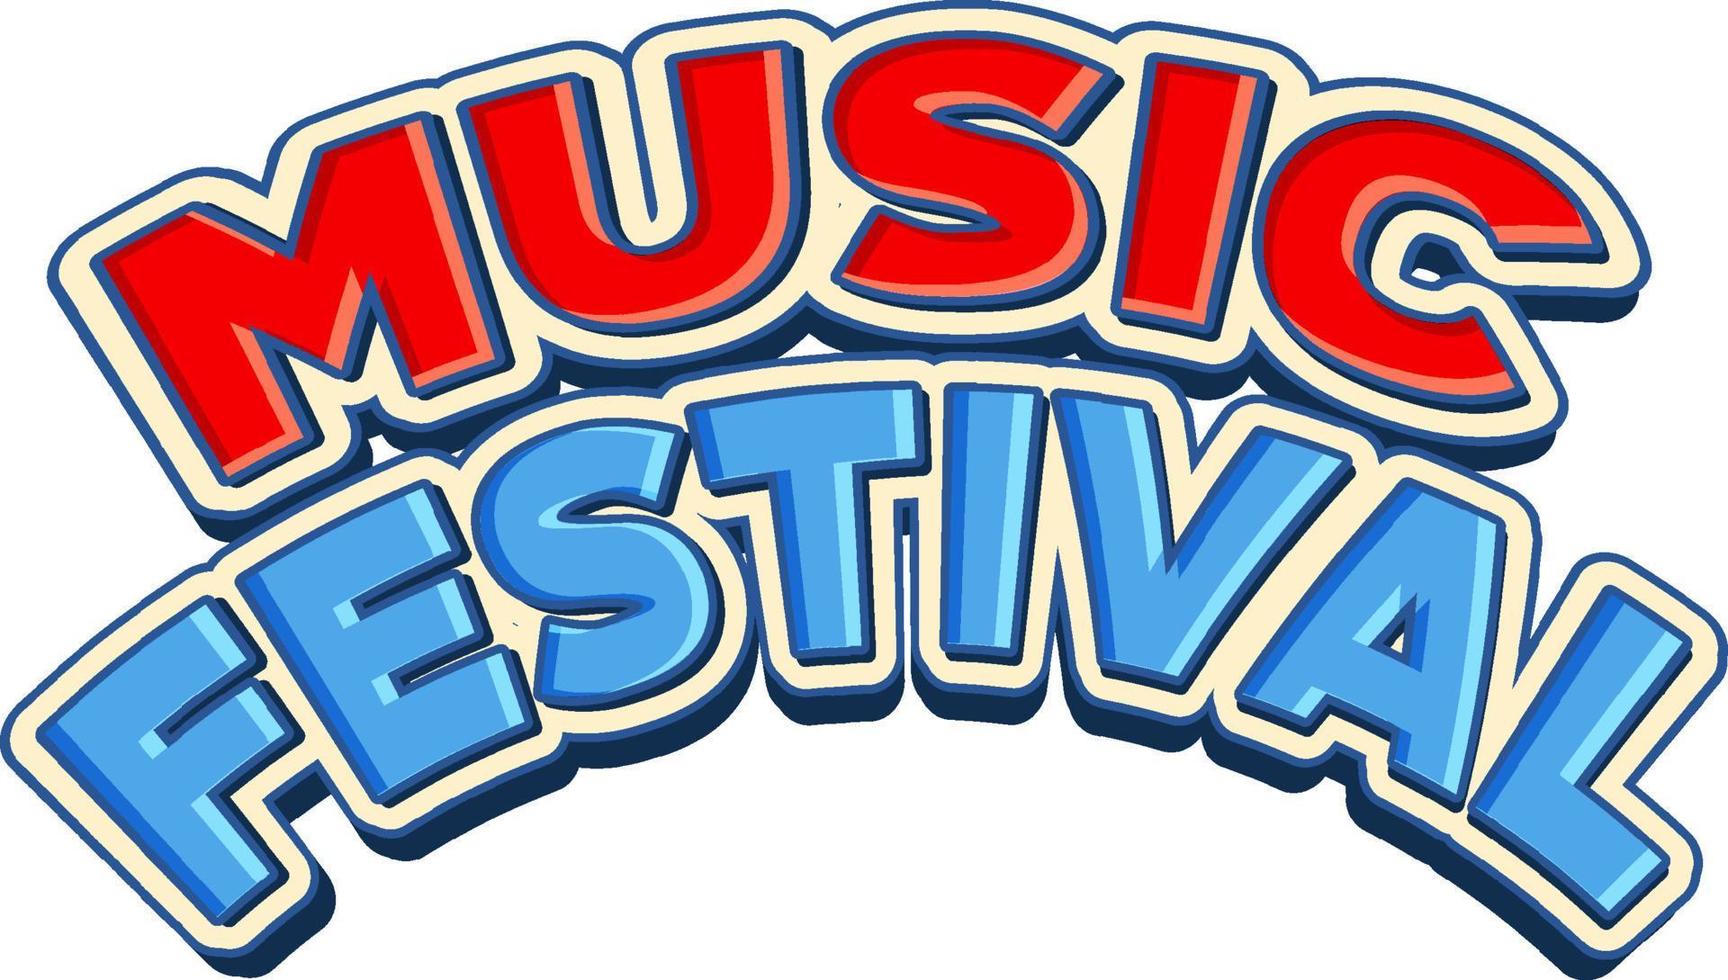 Music festival text for poster or banner design vector